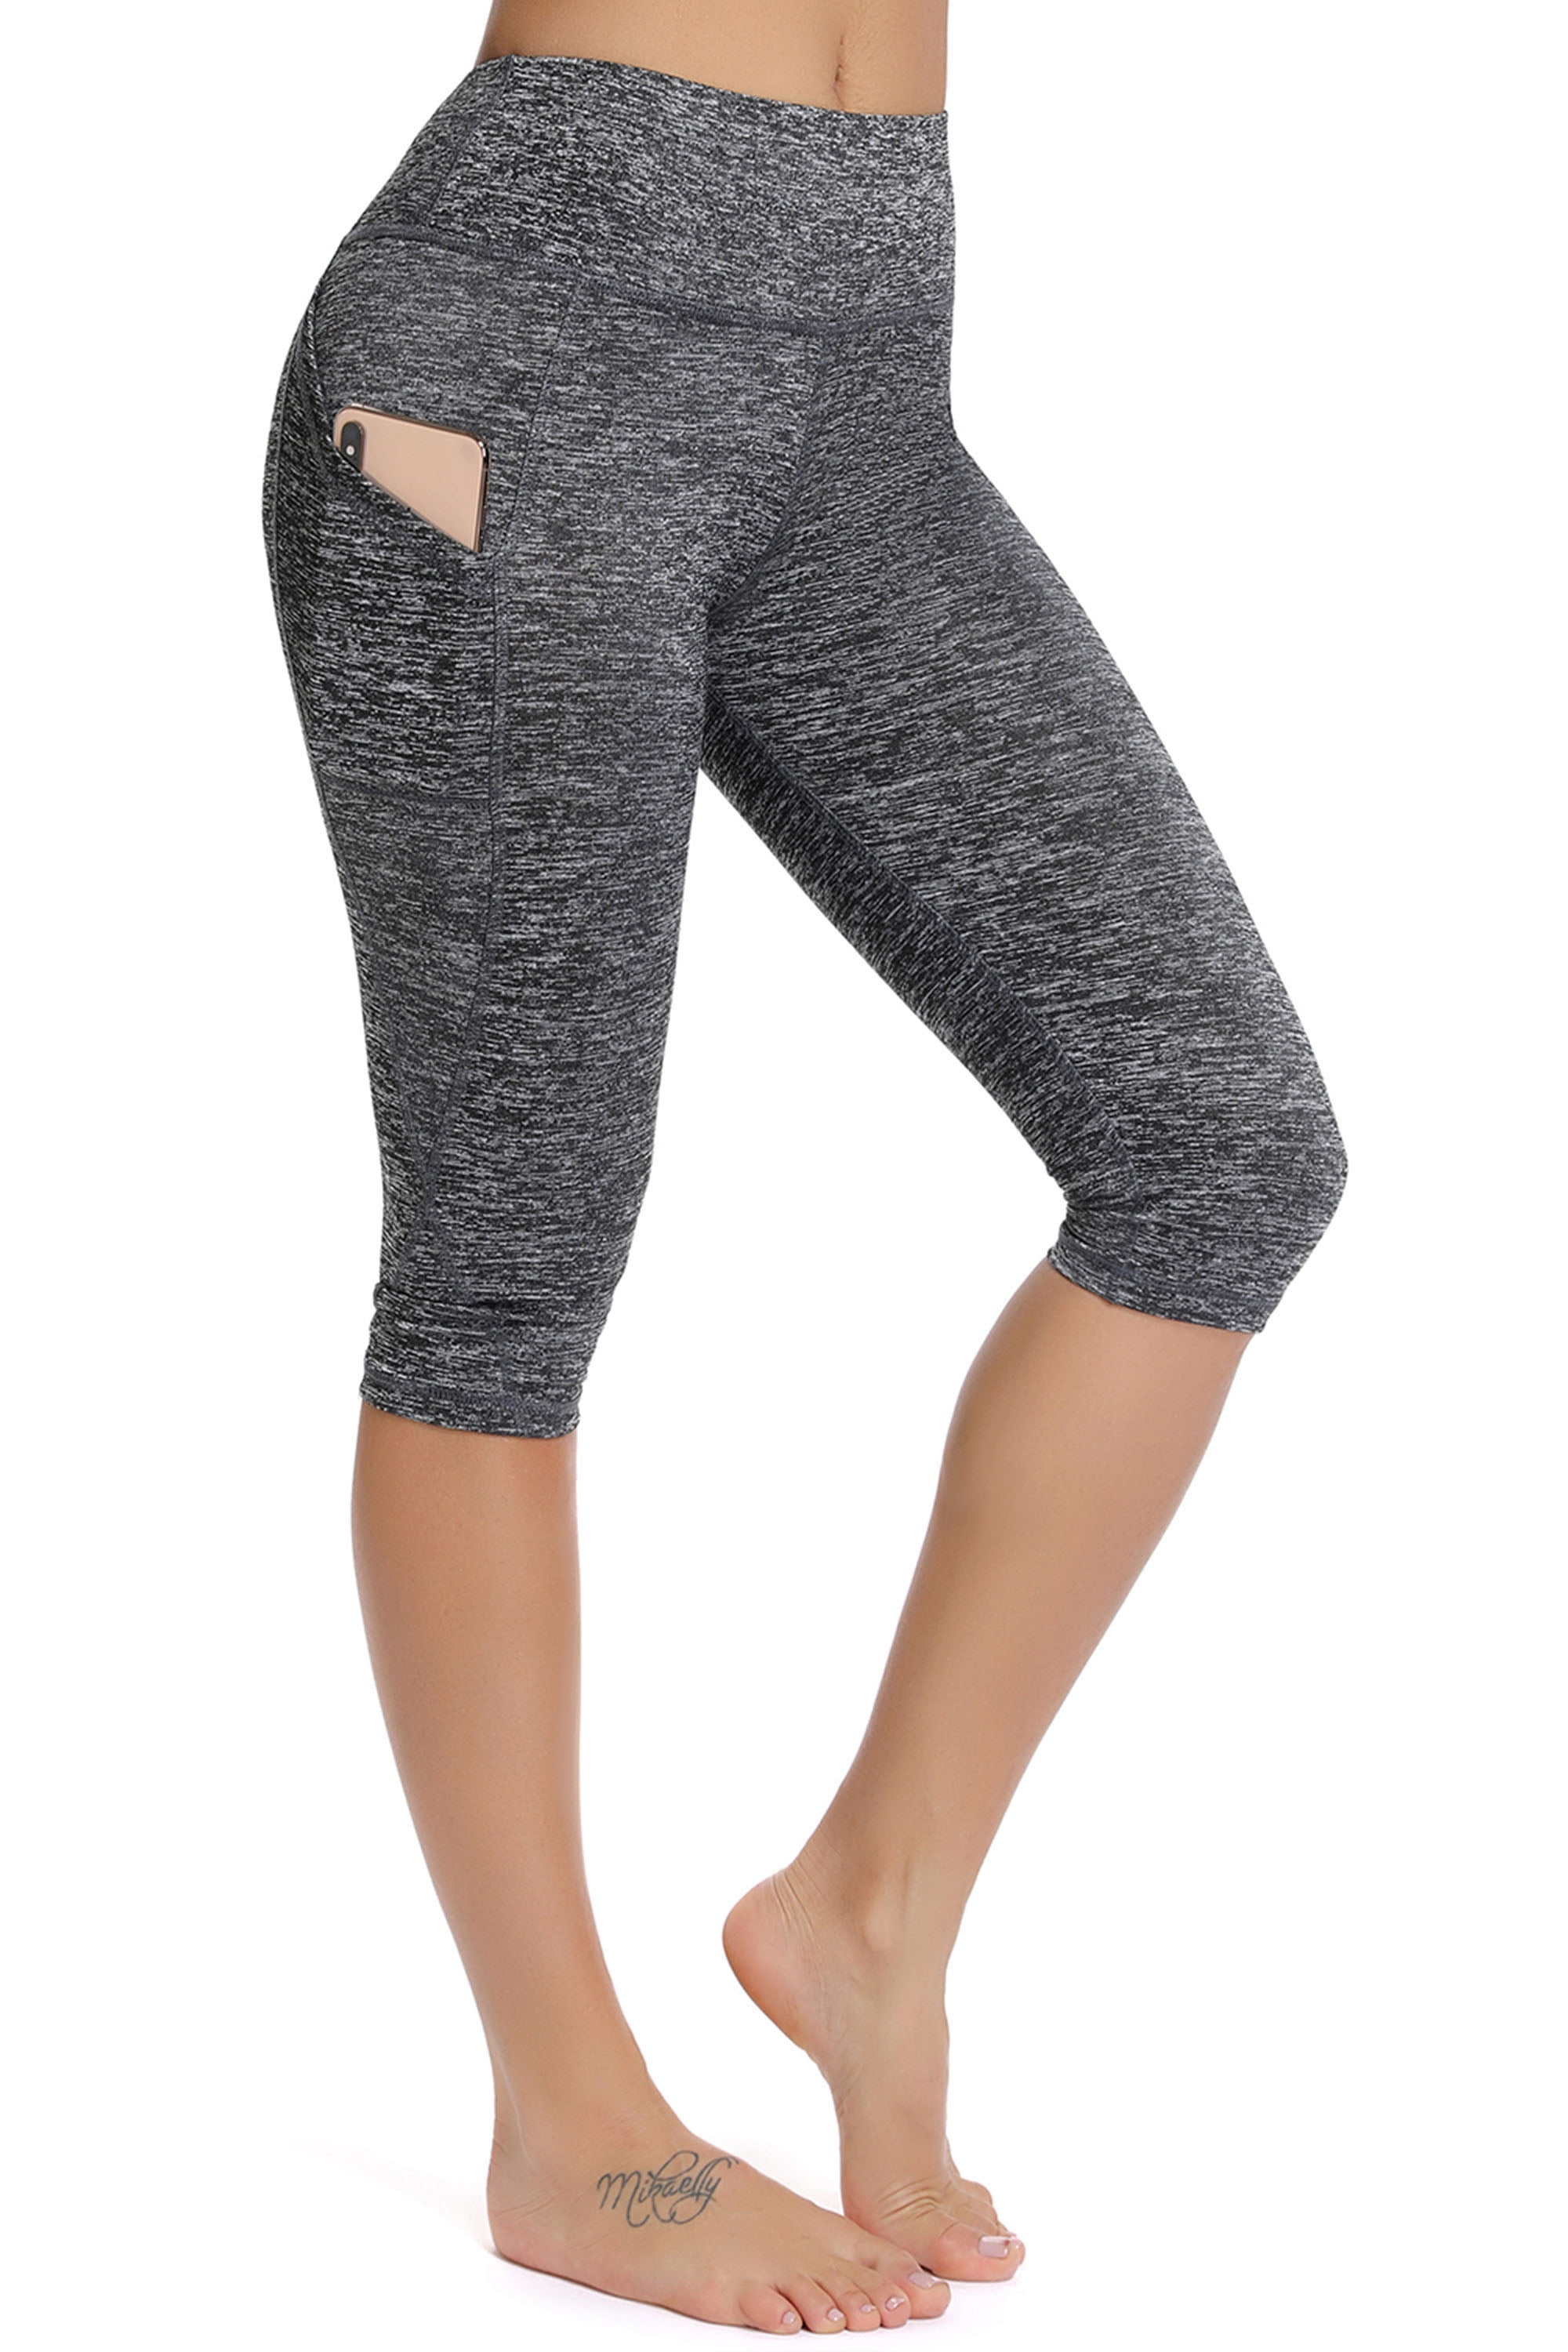 Custom Leggings Women High Waist Soft Yoga Workout Stretch Printed Ethnic Geometric Pattern Stretchy Capris Pants 